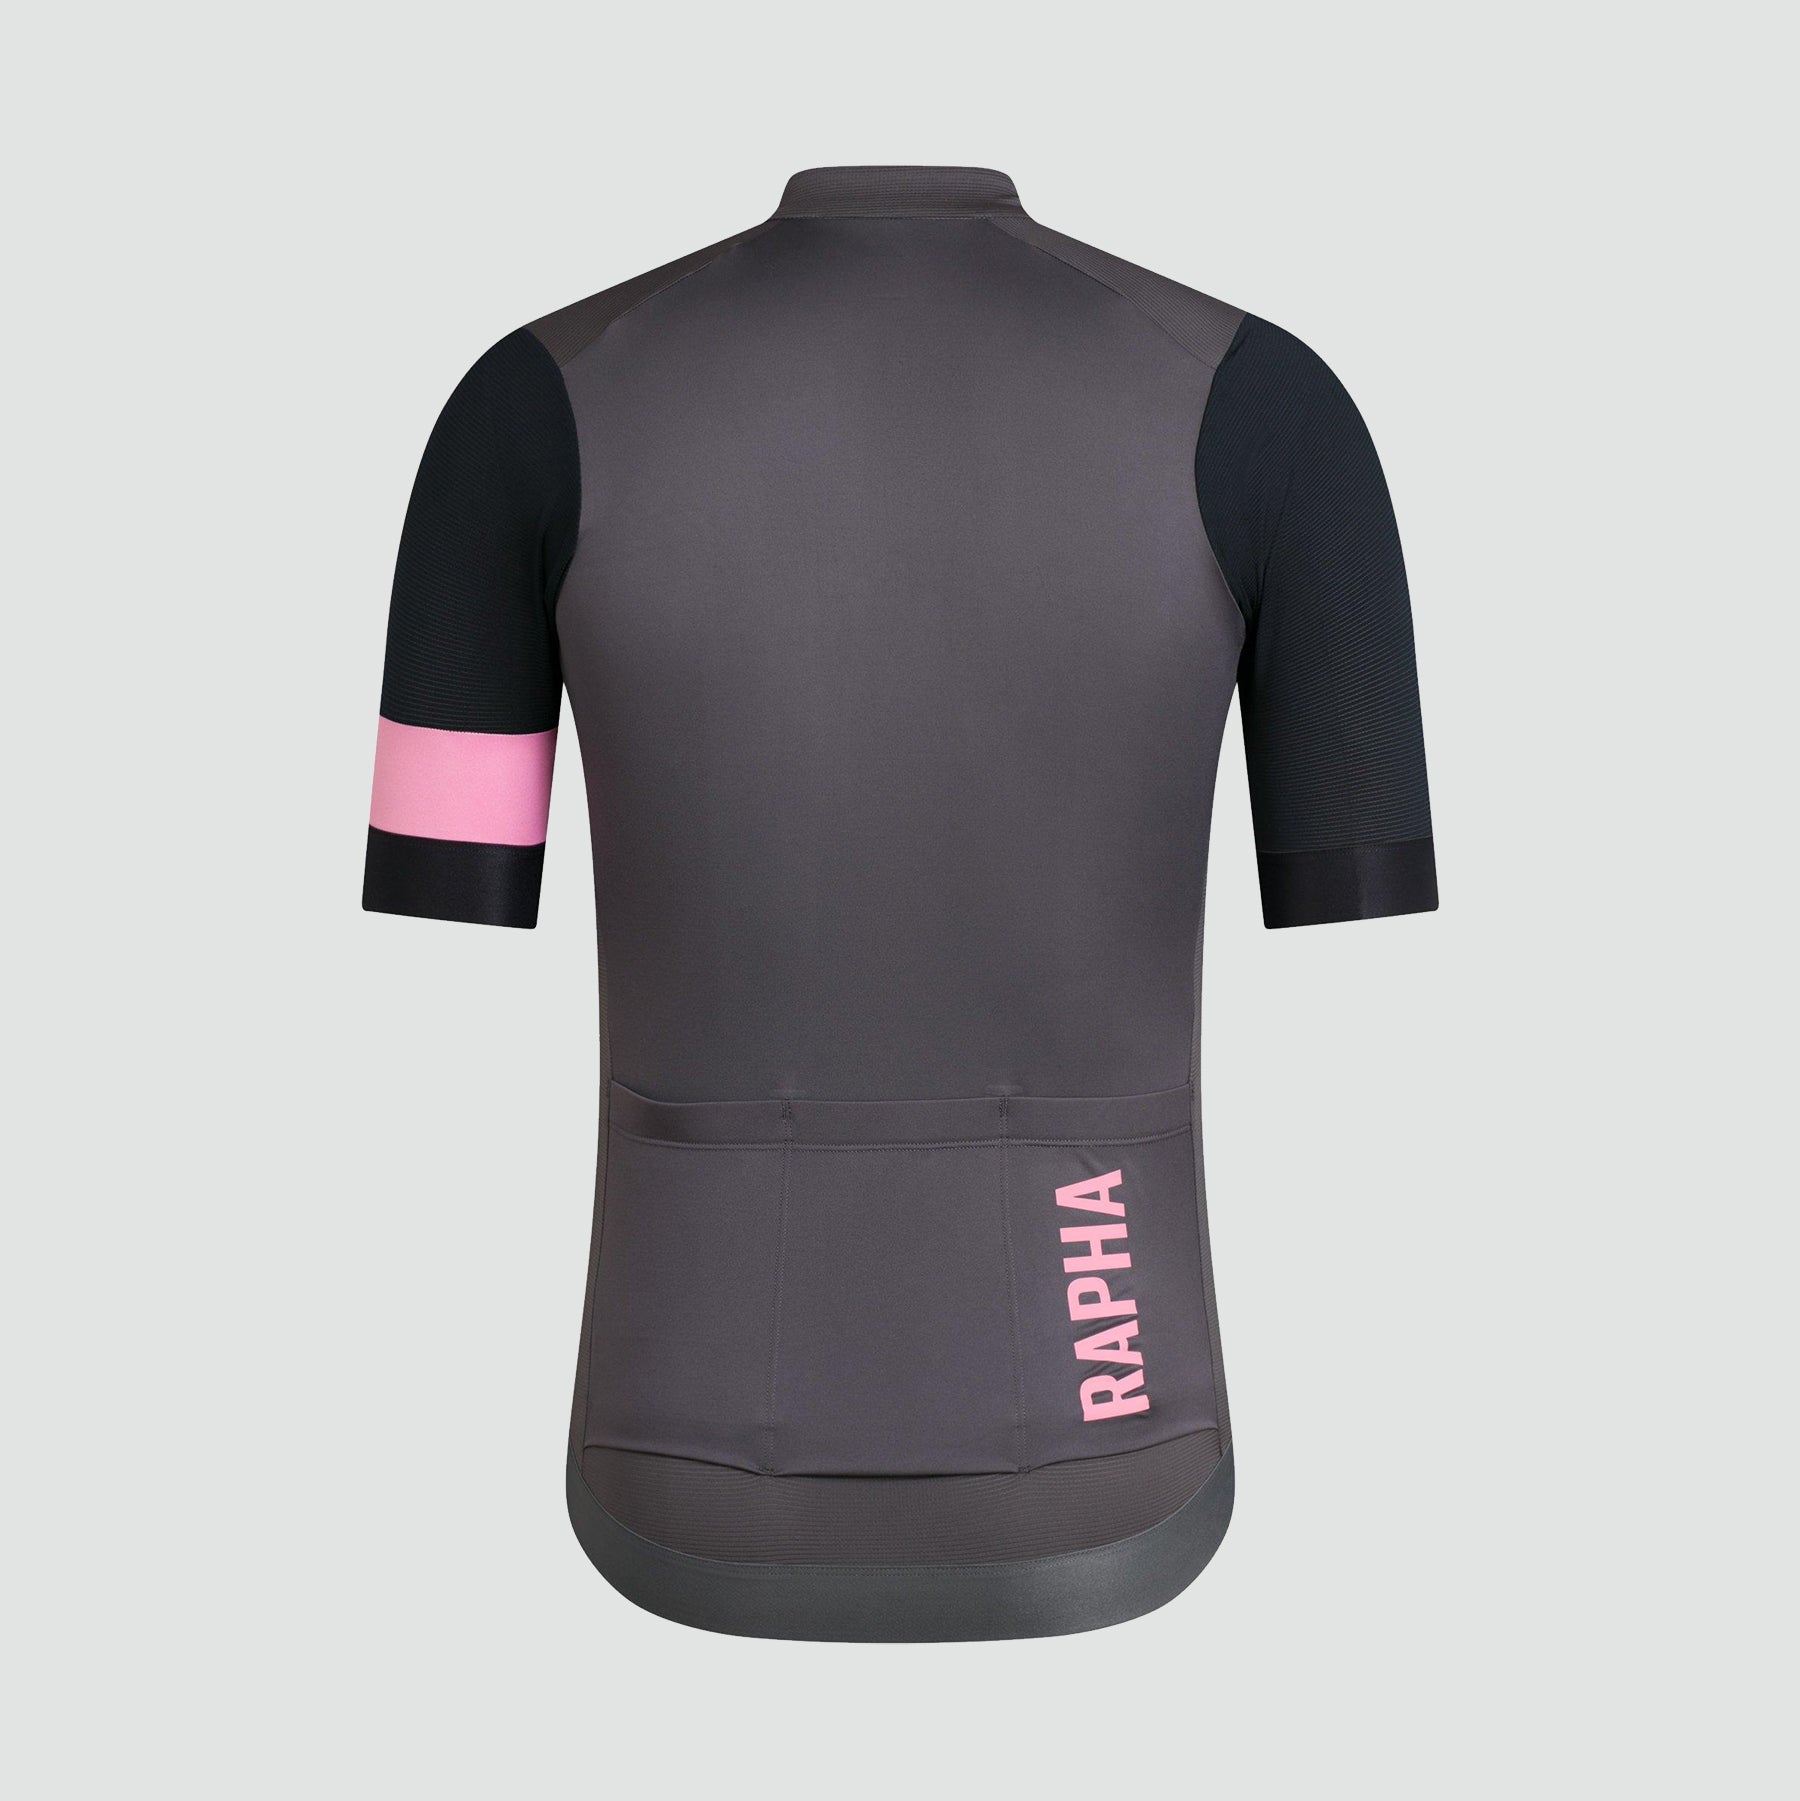 Pro Team Training Jersey - Carbon Grey/Black/Pink